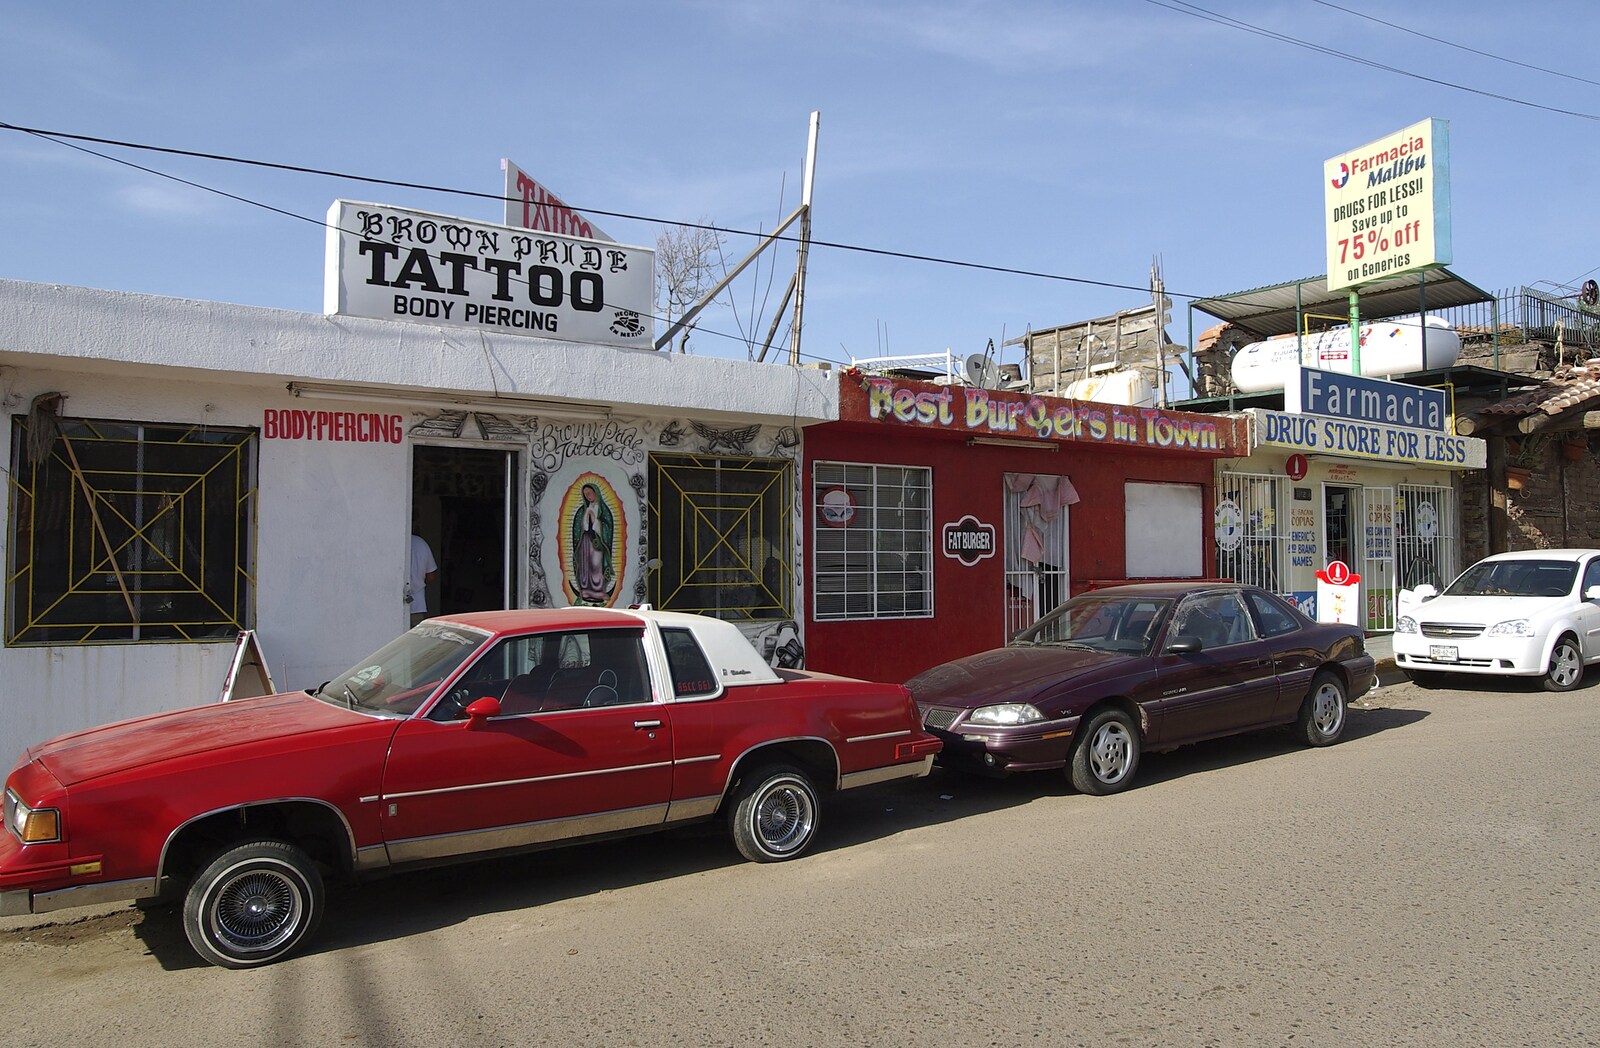 Rosarito and Tijuana, Baja California, Mexico - 2nd March 2008: Classic 1970s car outside Brown Pride Tattoo